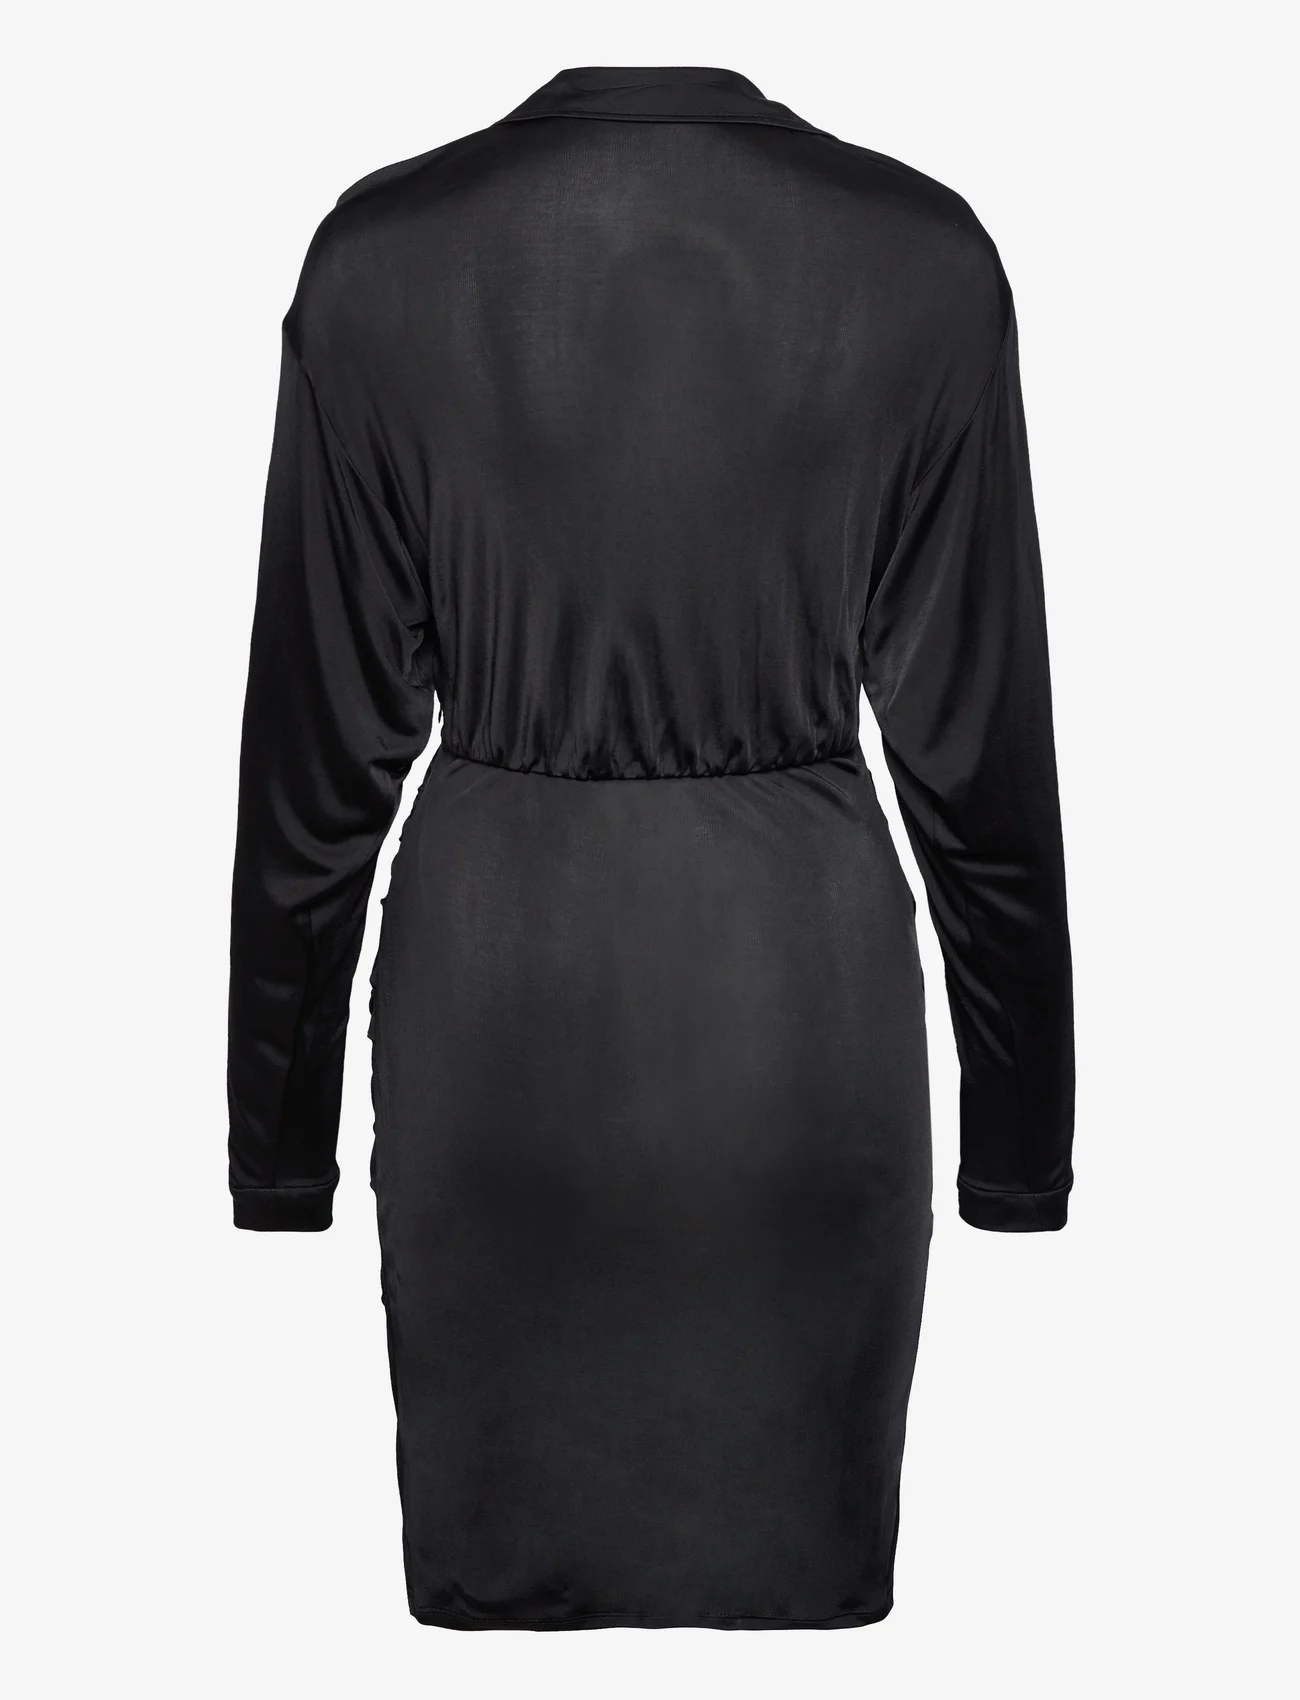 Diane von Furstenberg - DVF TROIAN DRESS - feestelijke kleding voor outlet-prijzen - black - 1